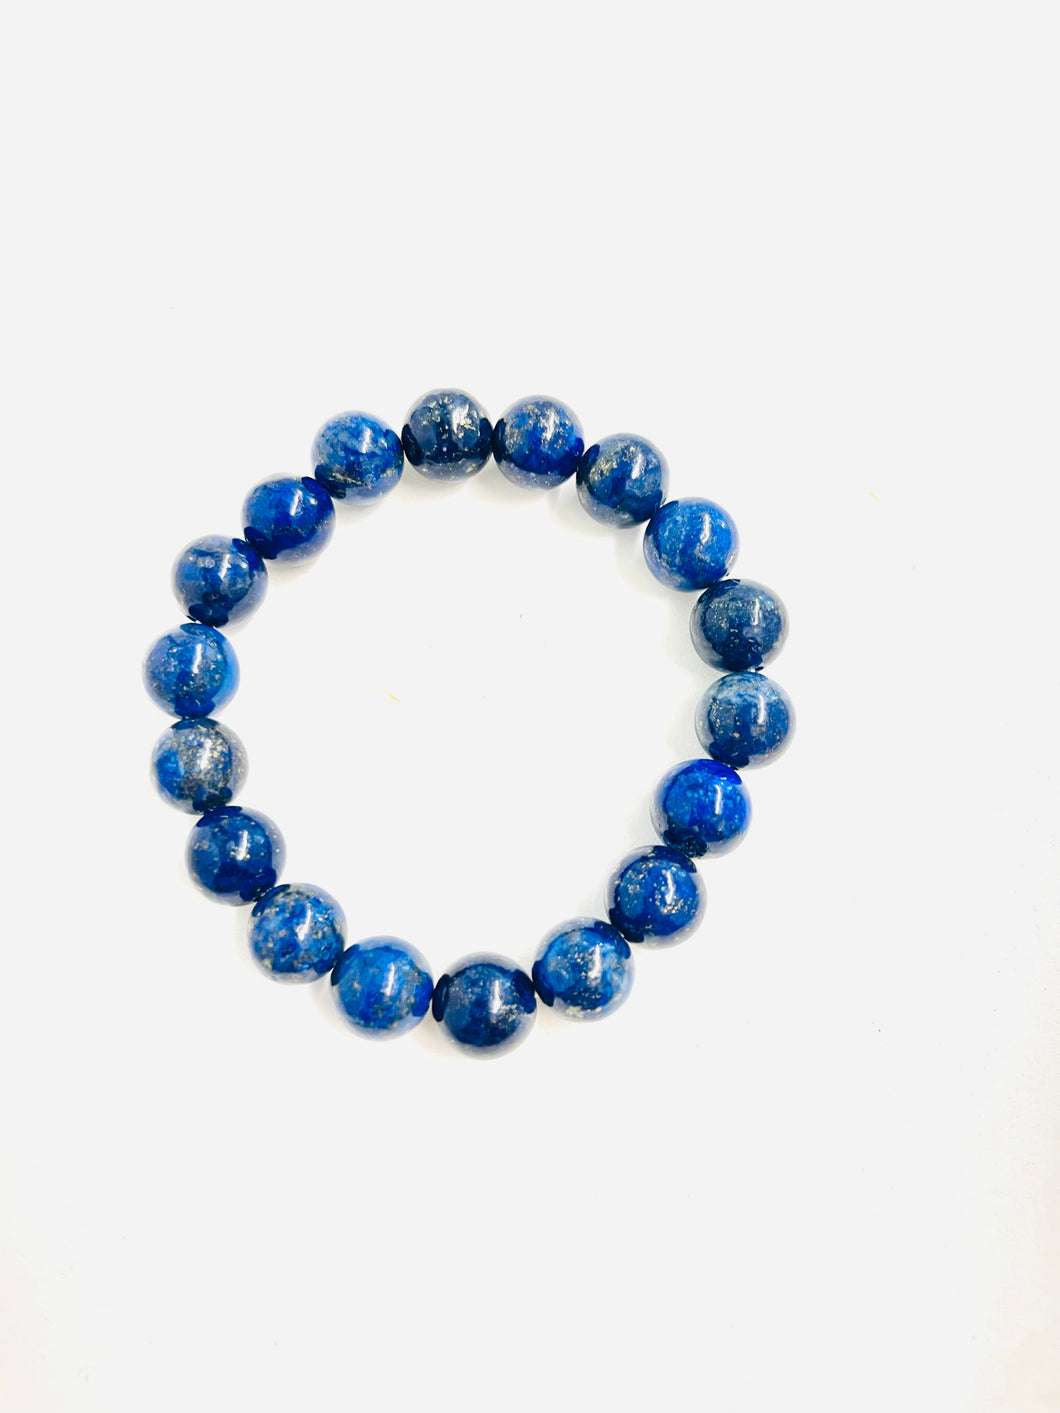 Bracelet with lapis lazuli